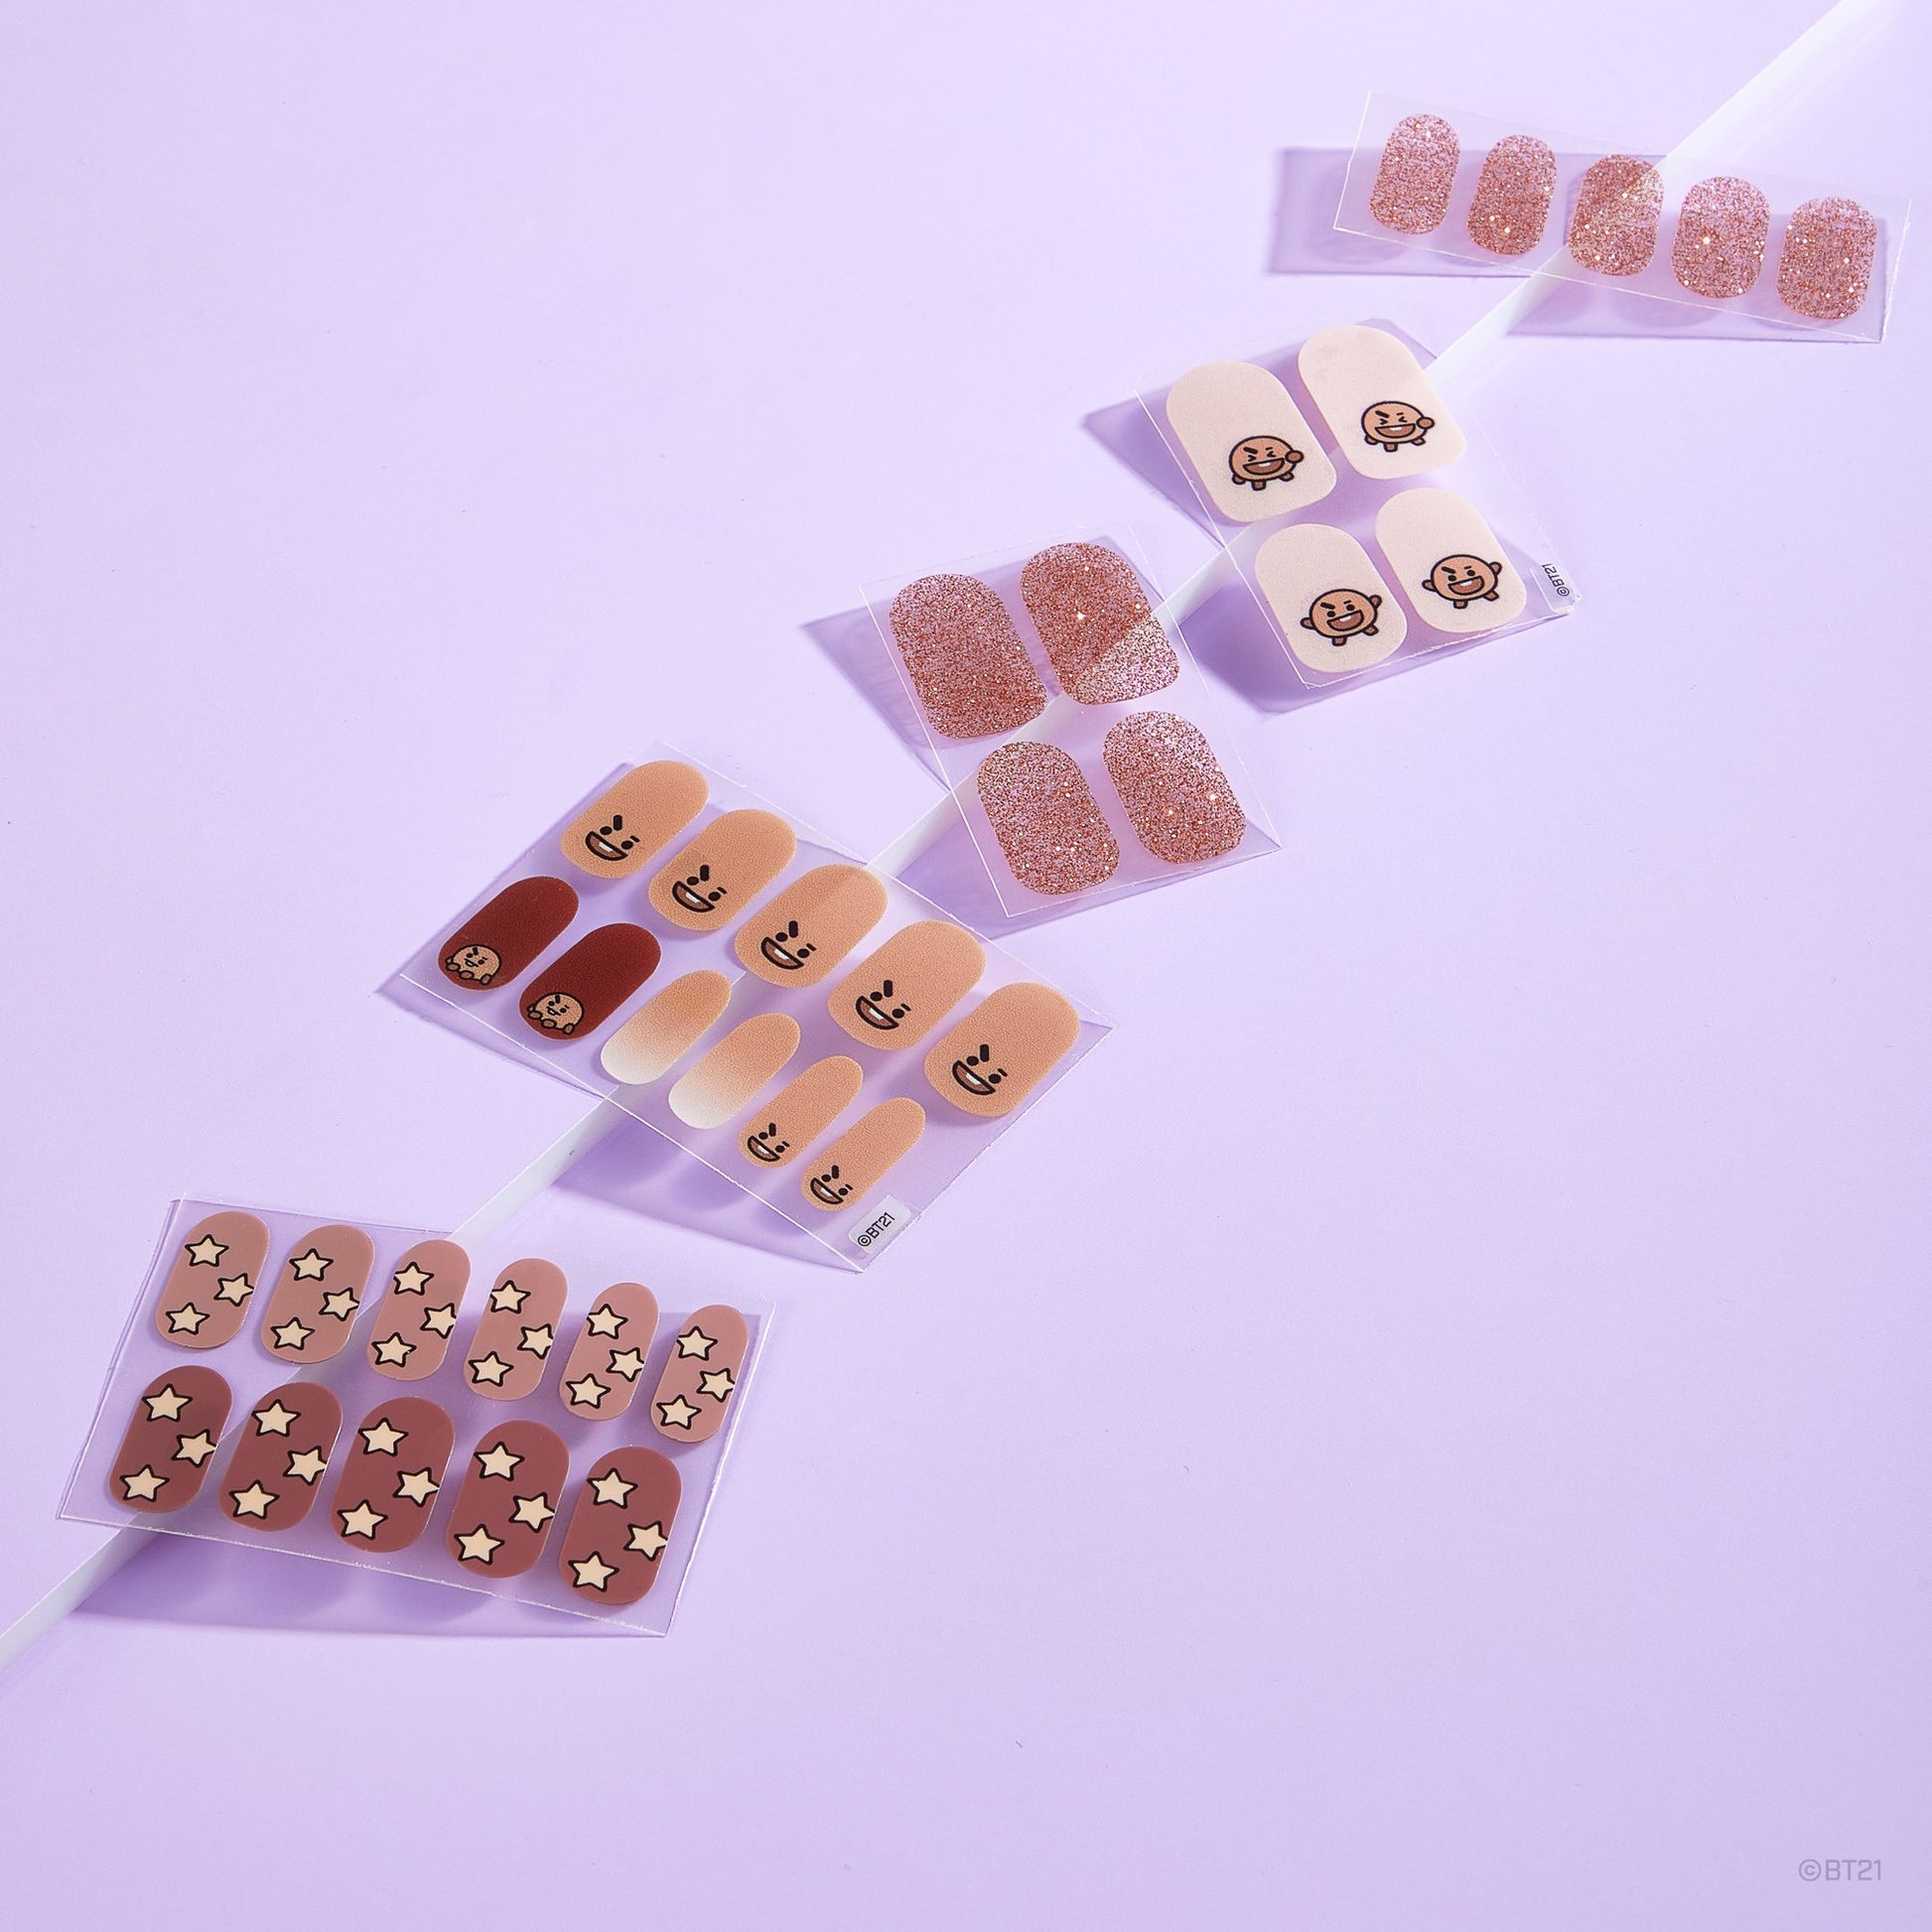 Hello Kitty Gel Nail Strips Kit - Sweetie Sprinkles | The Crème Shop